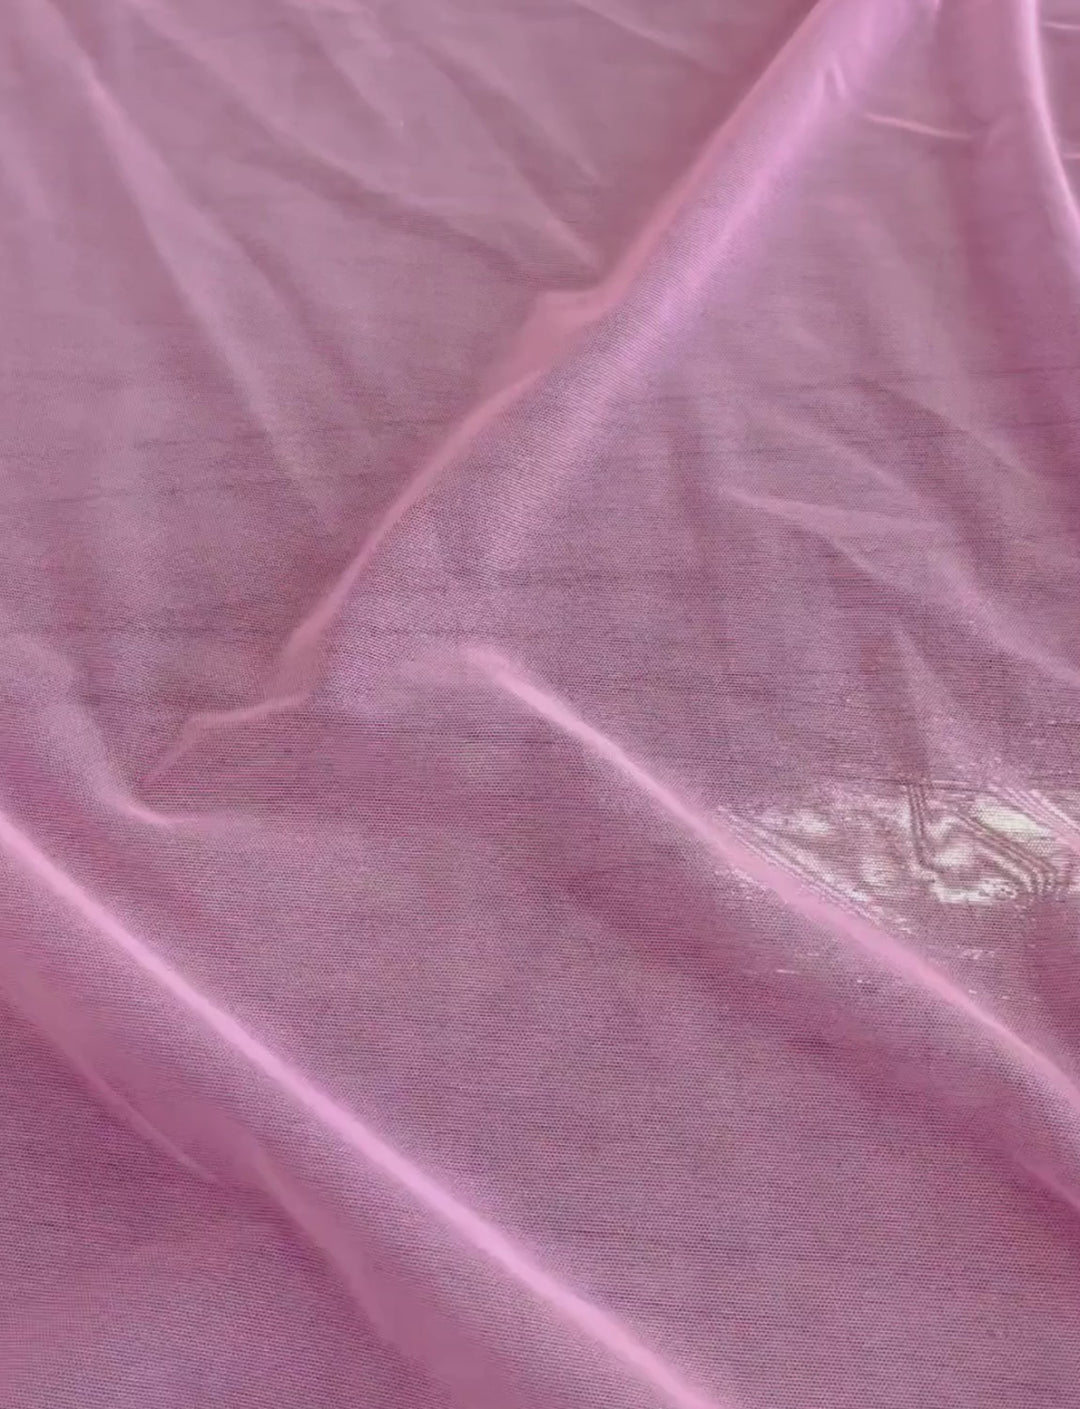 Sheer pink mesh stretch fabric.